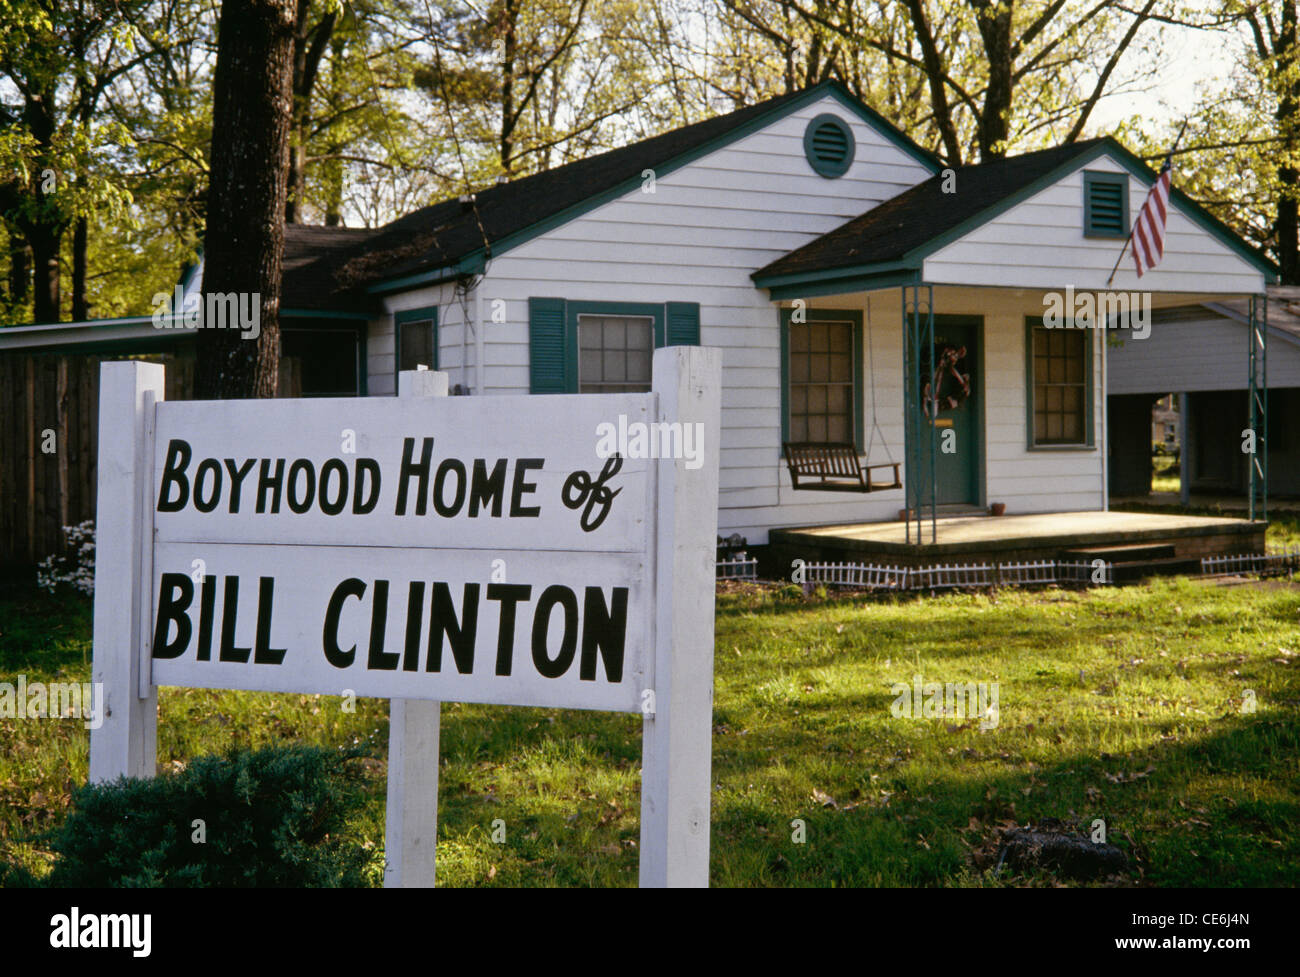 Boyhood Home of Bill Clinton, Arkansas, USA Stock Photo